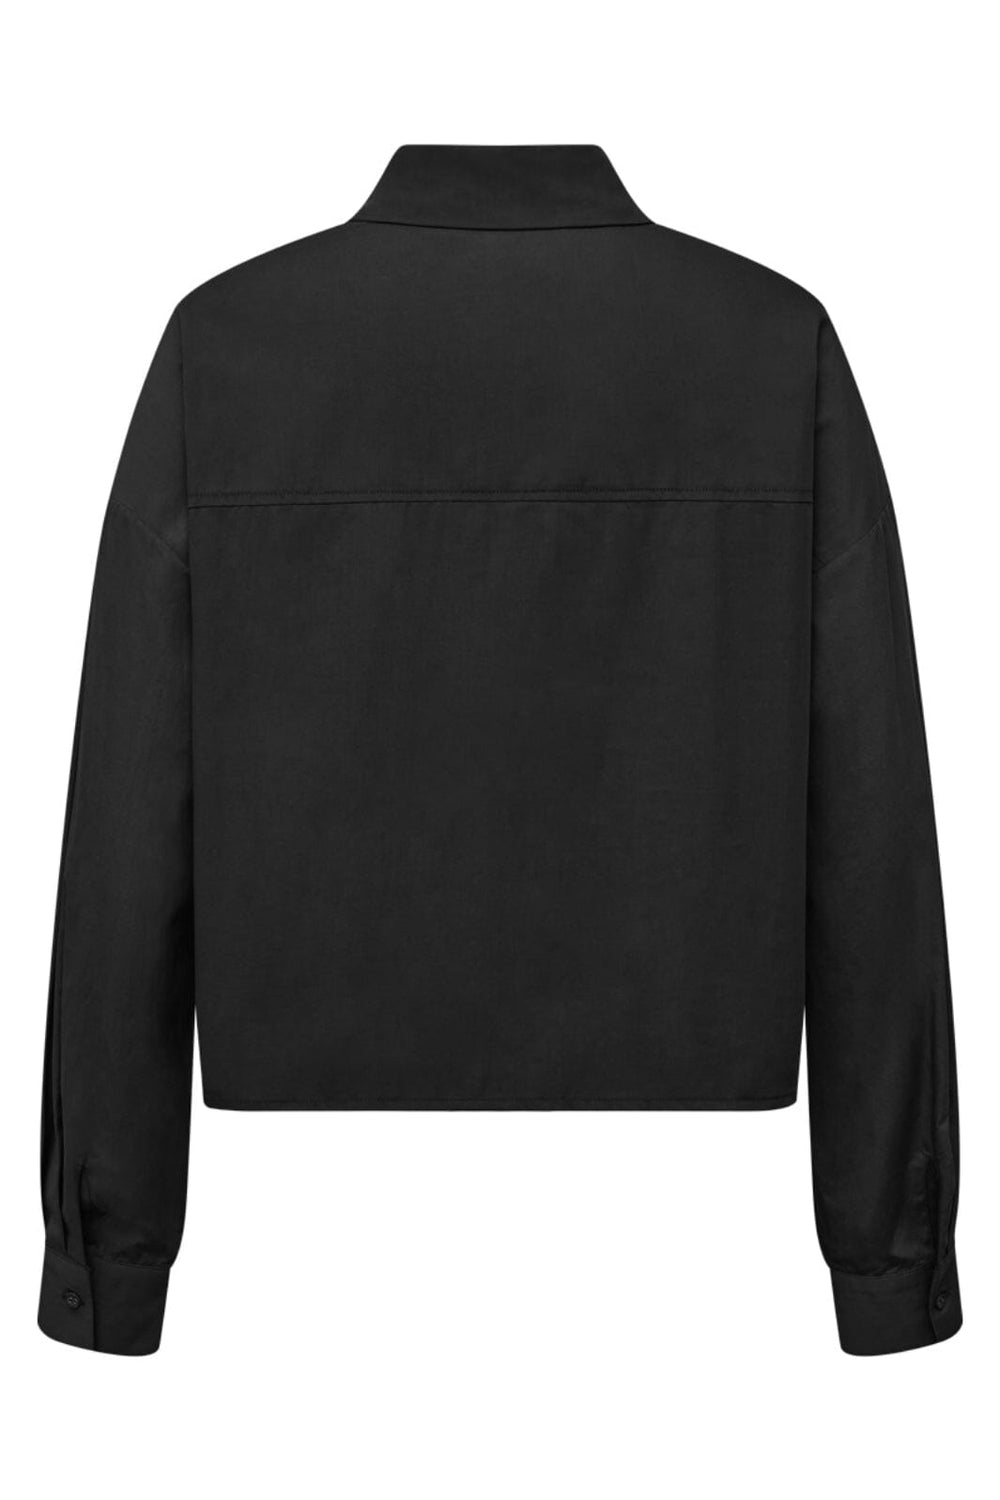 Gossia - AlphaGO Shirt - Black Skjorter 